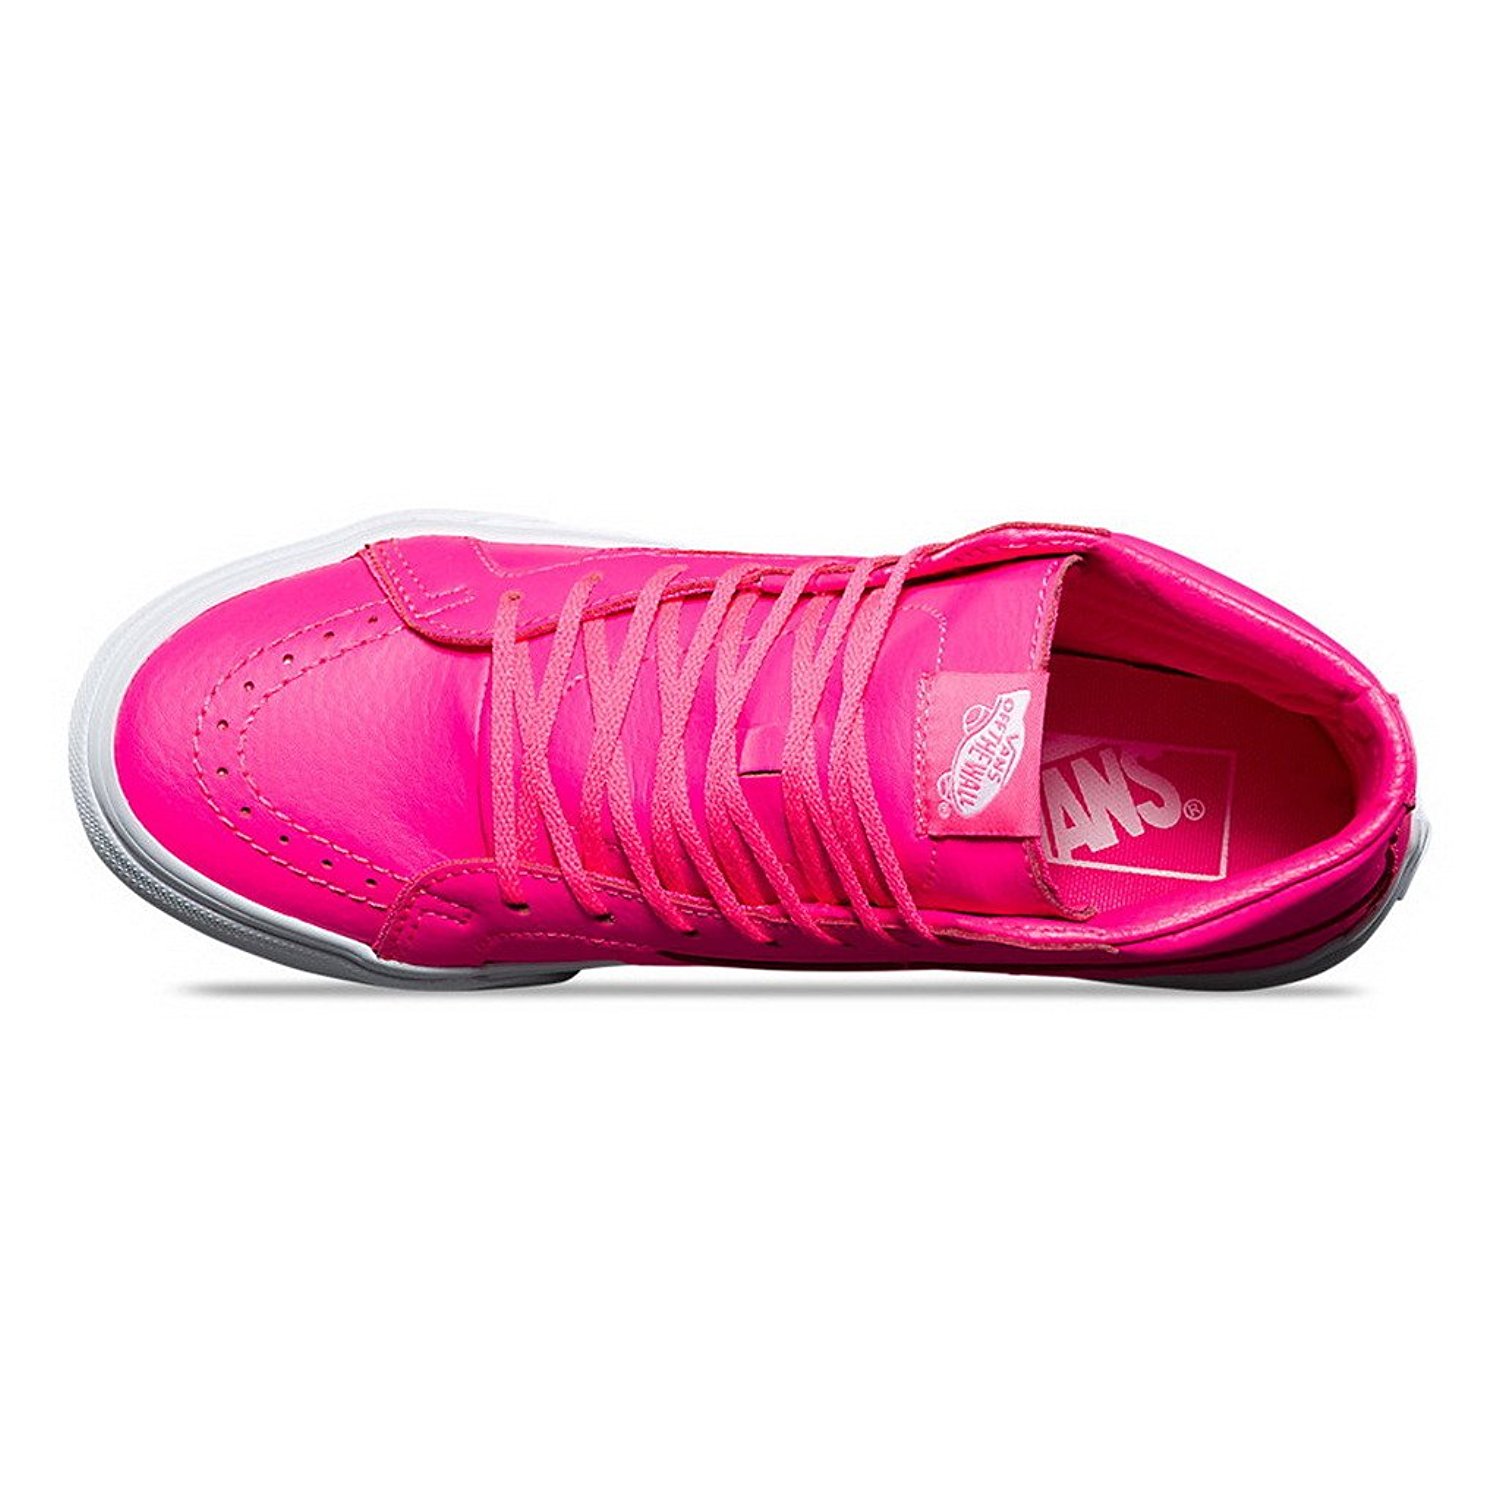 Vans Sk8-Hi Slim Neon Leather Pink High-Top Skateboarding Shoe - 7M / 5.5M - image 3 of 4